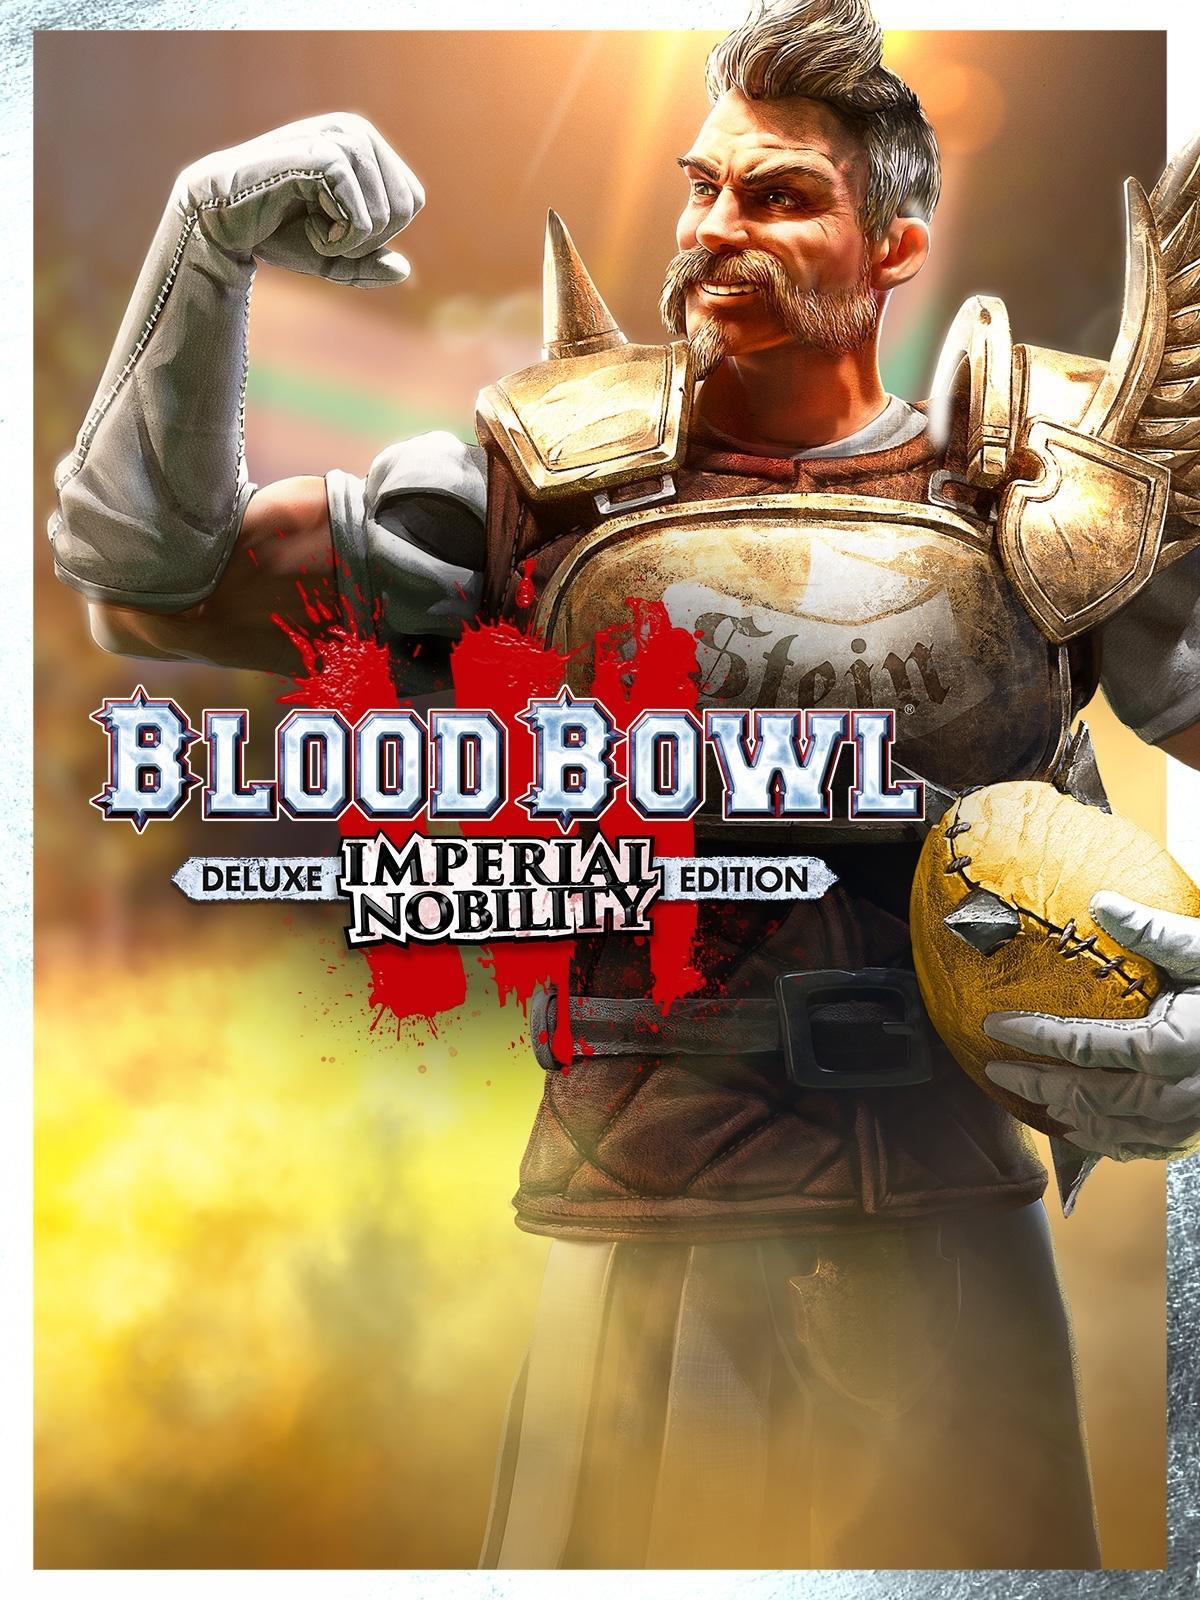 Blood Bowl 3 - Imperial Nobility Edition Pre-order | ROW 1 (70e2cba6-8a34-40cb-9c8d-7423e7884c96)